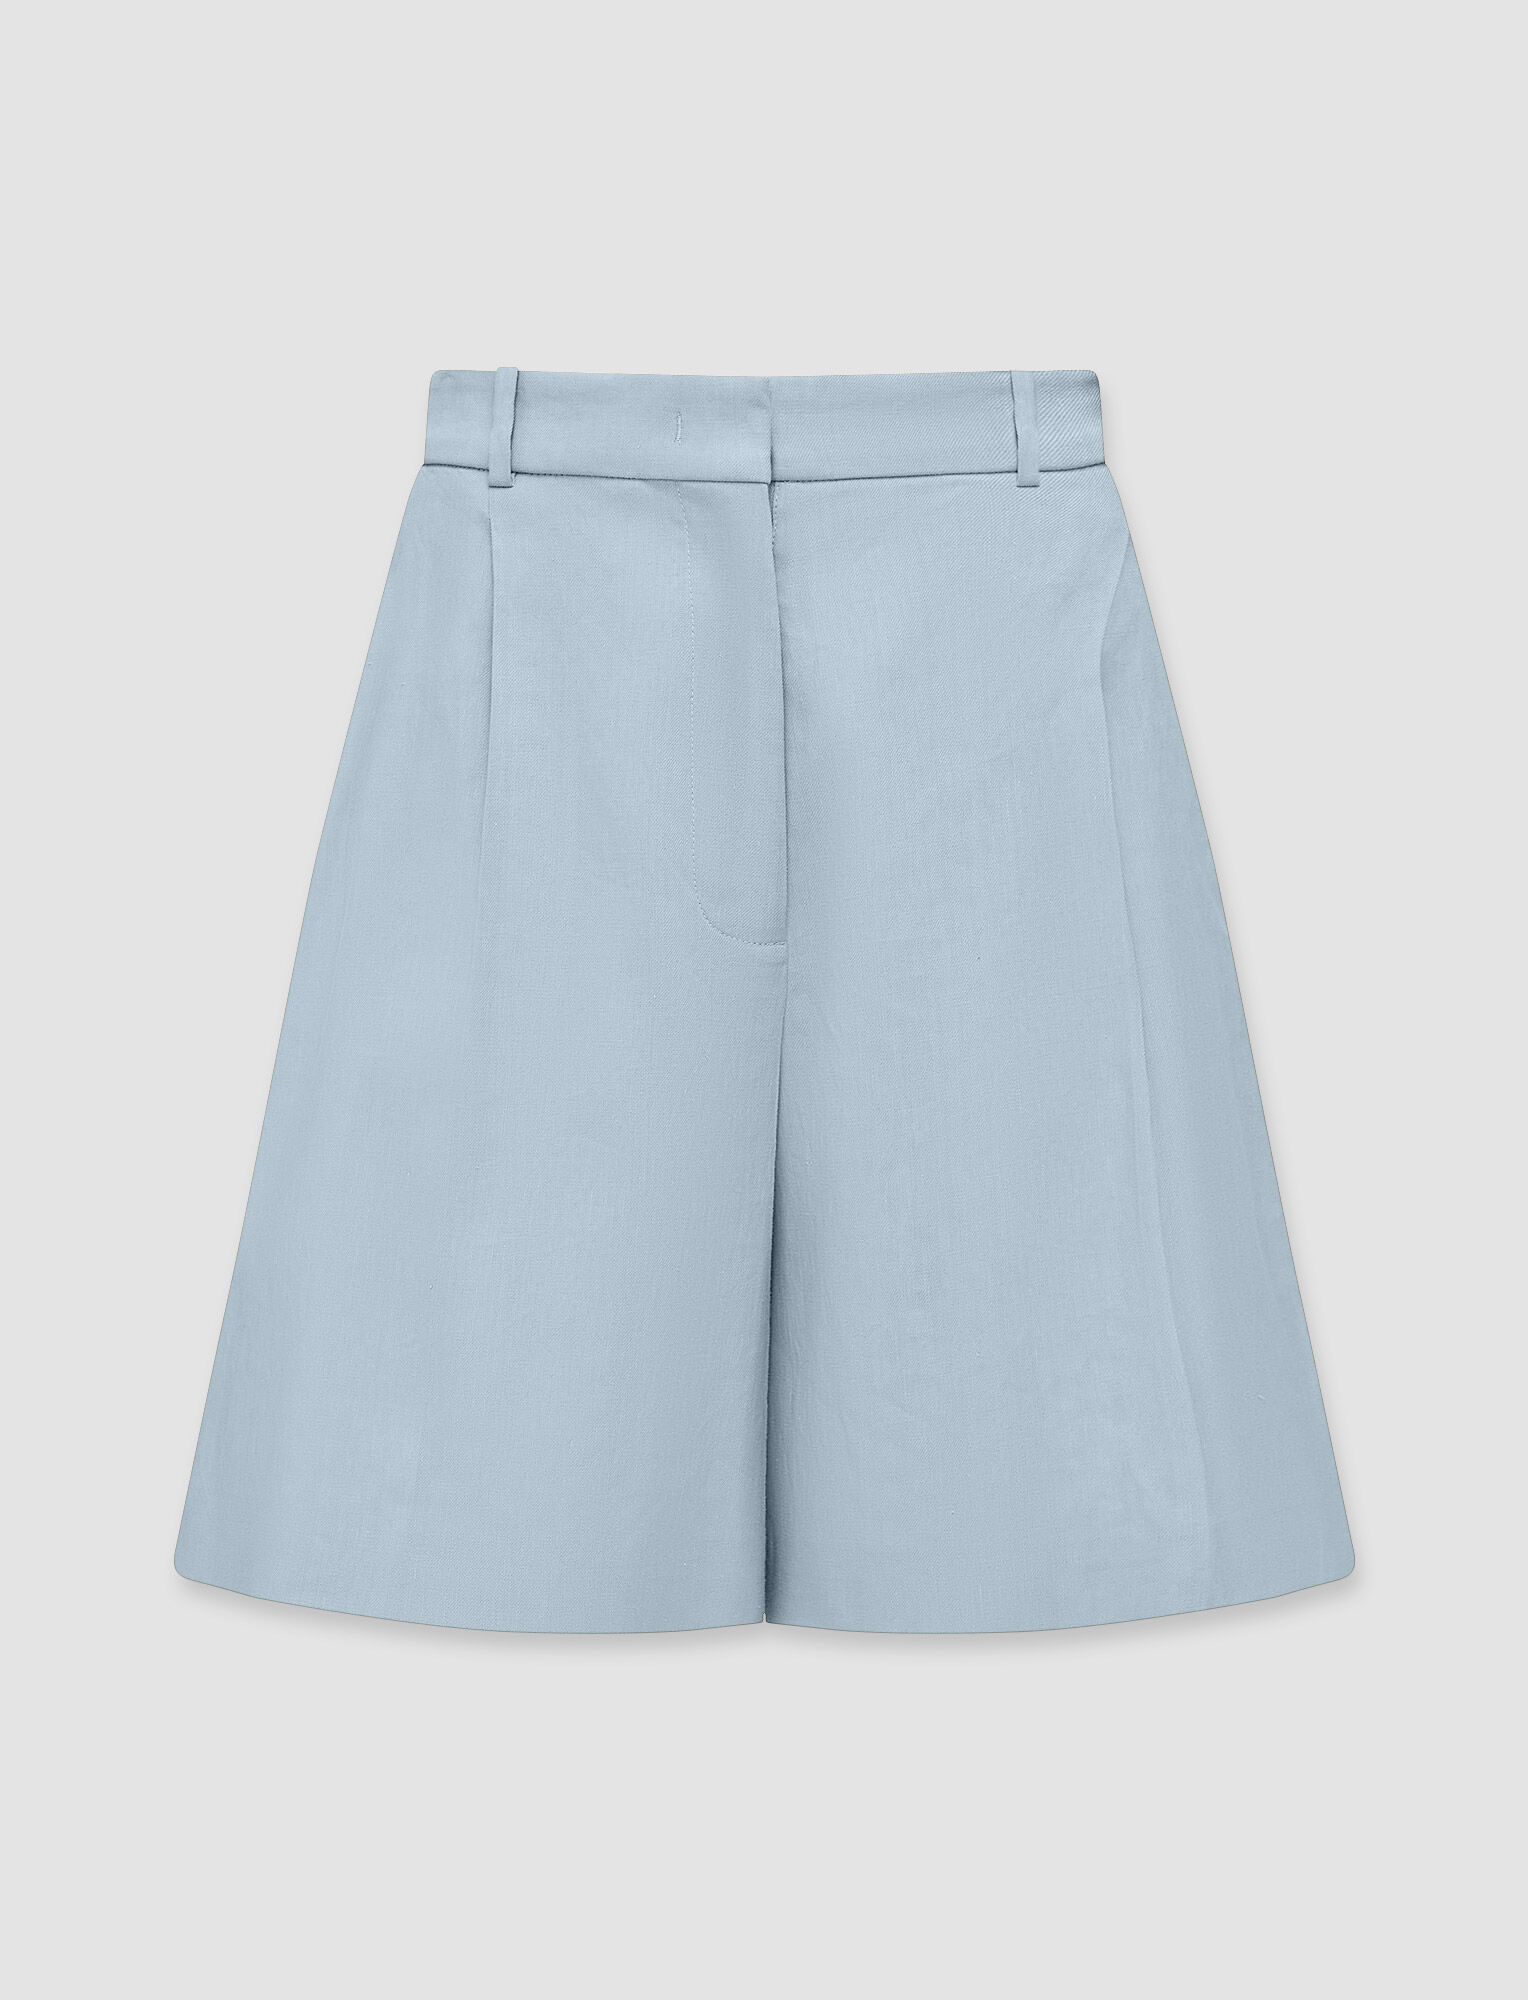 Joseph, Stretch Linen Cotton Walden Shorts, in Dusty Blue